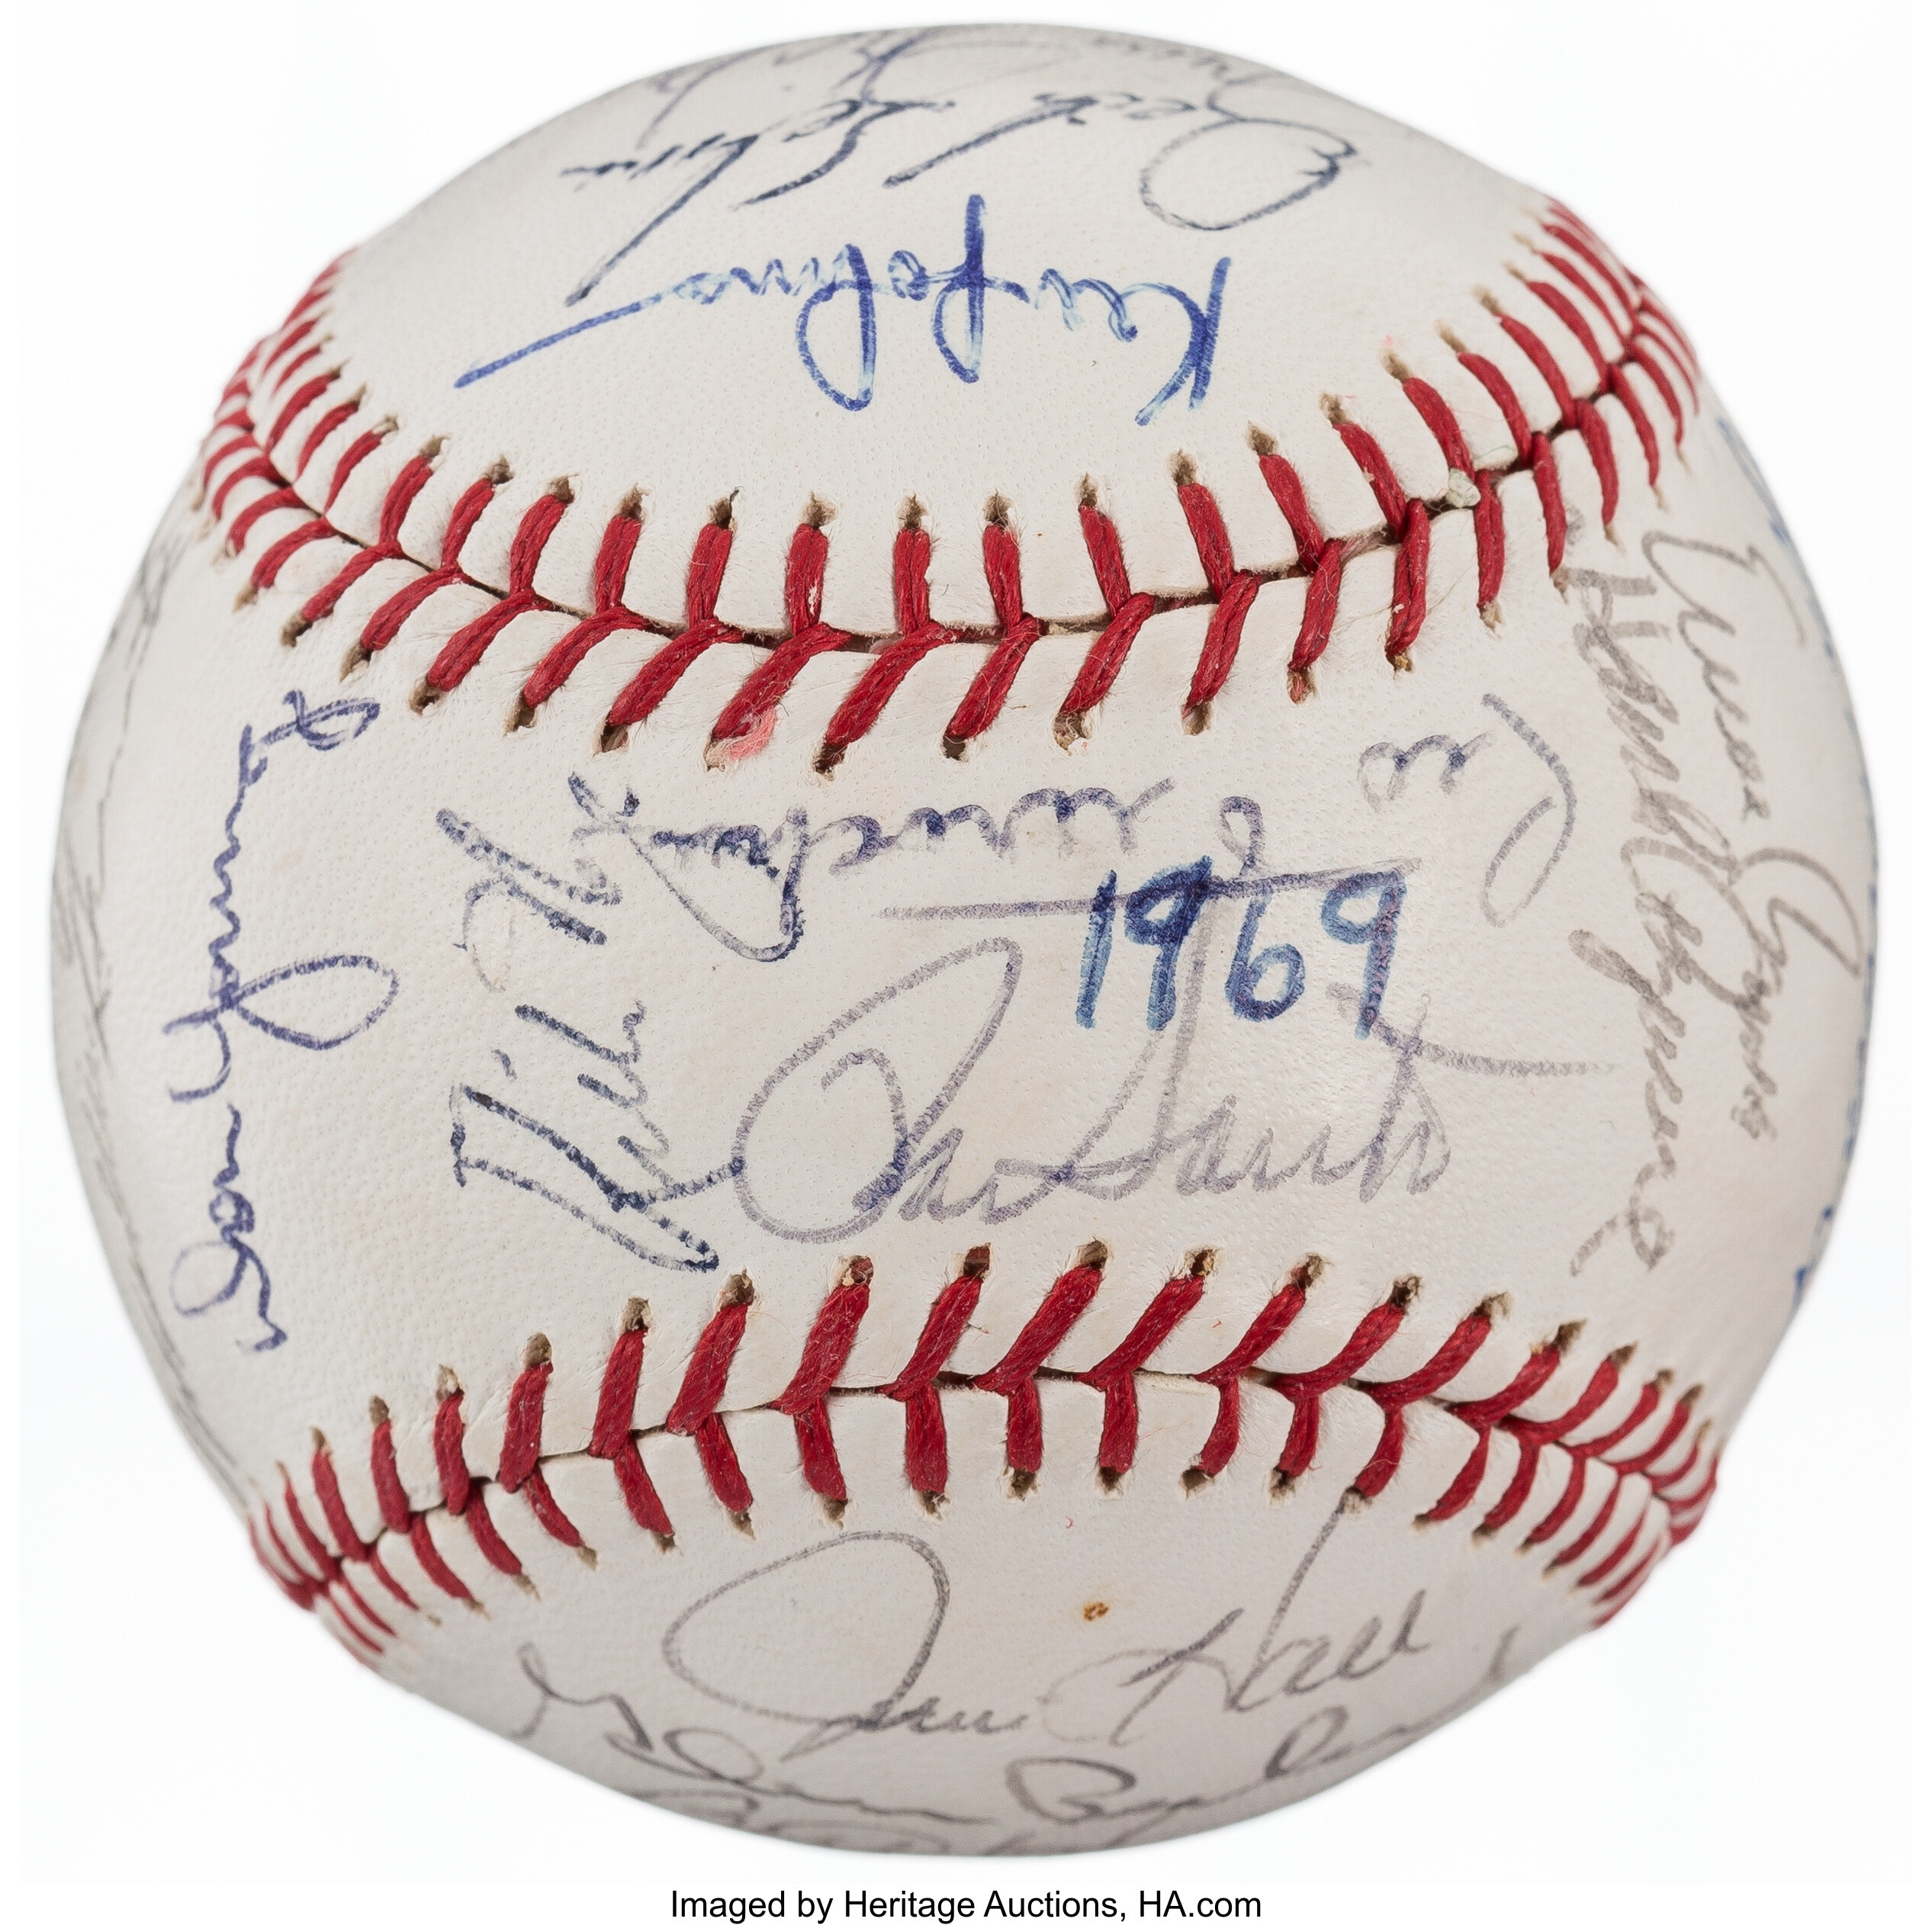 Lot Detail - 1969 Don Kessinger Chicago Cubs Signed Game Worn Home